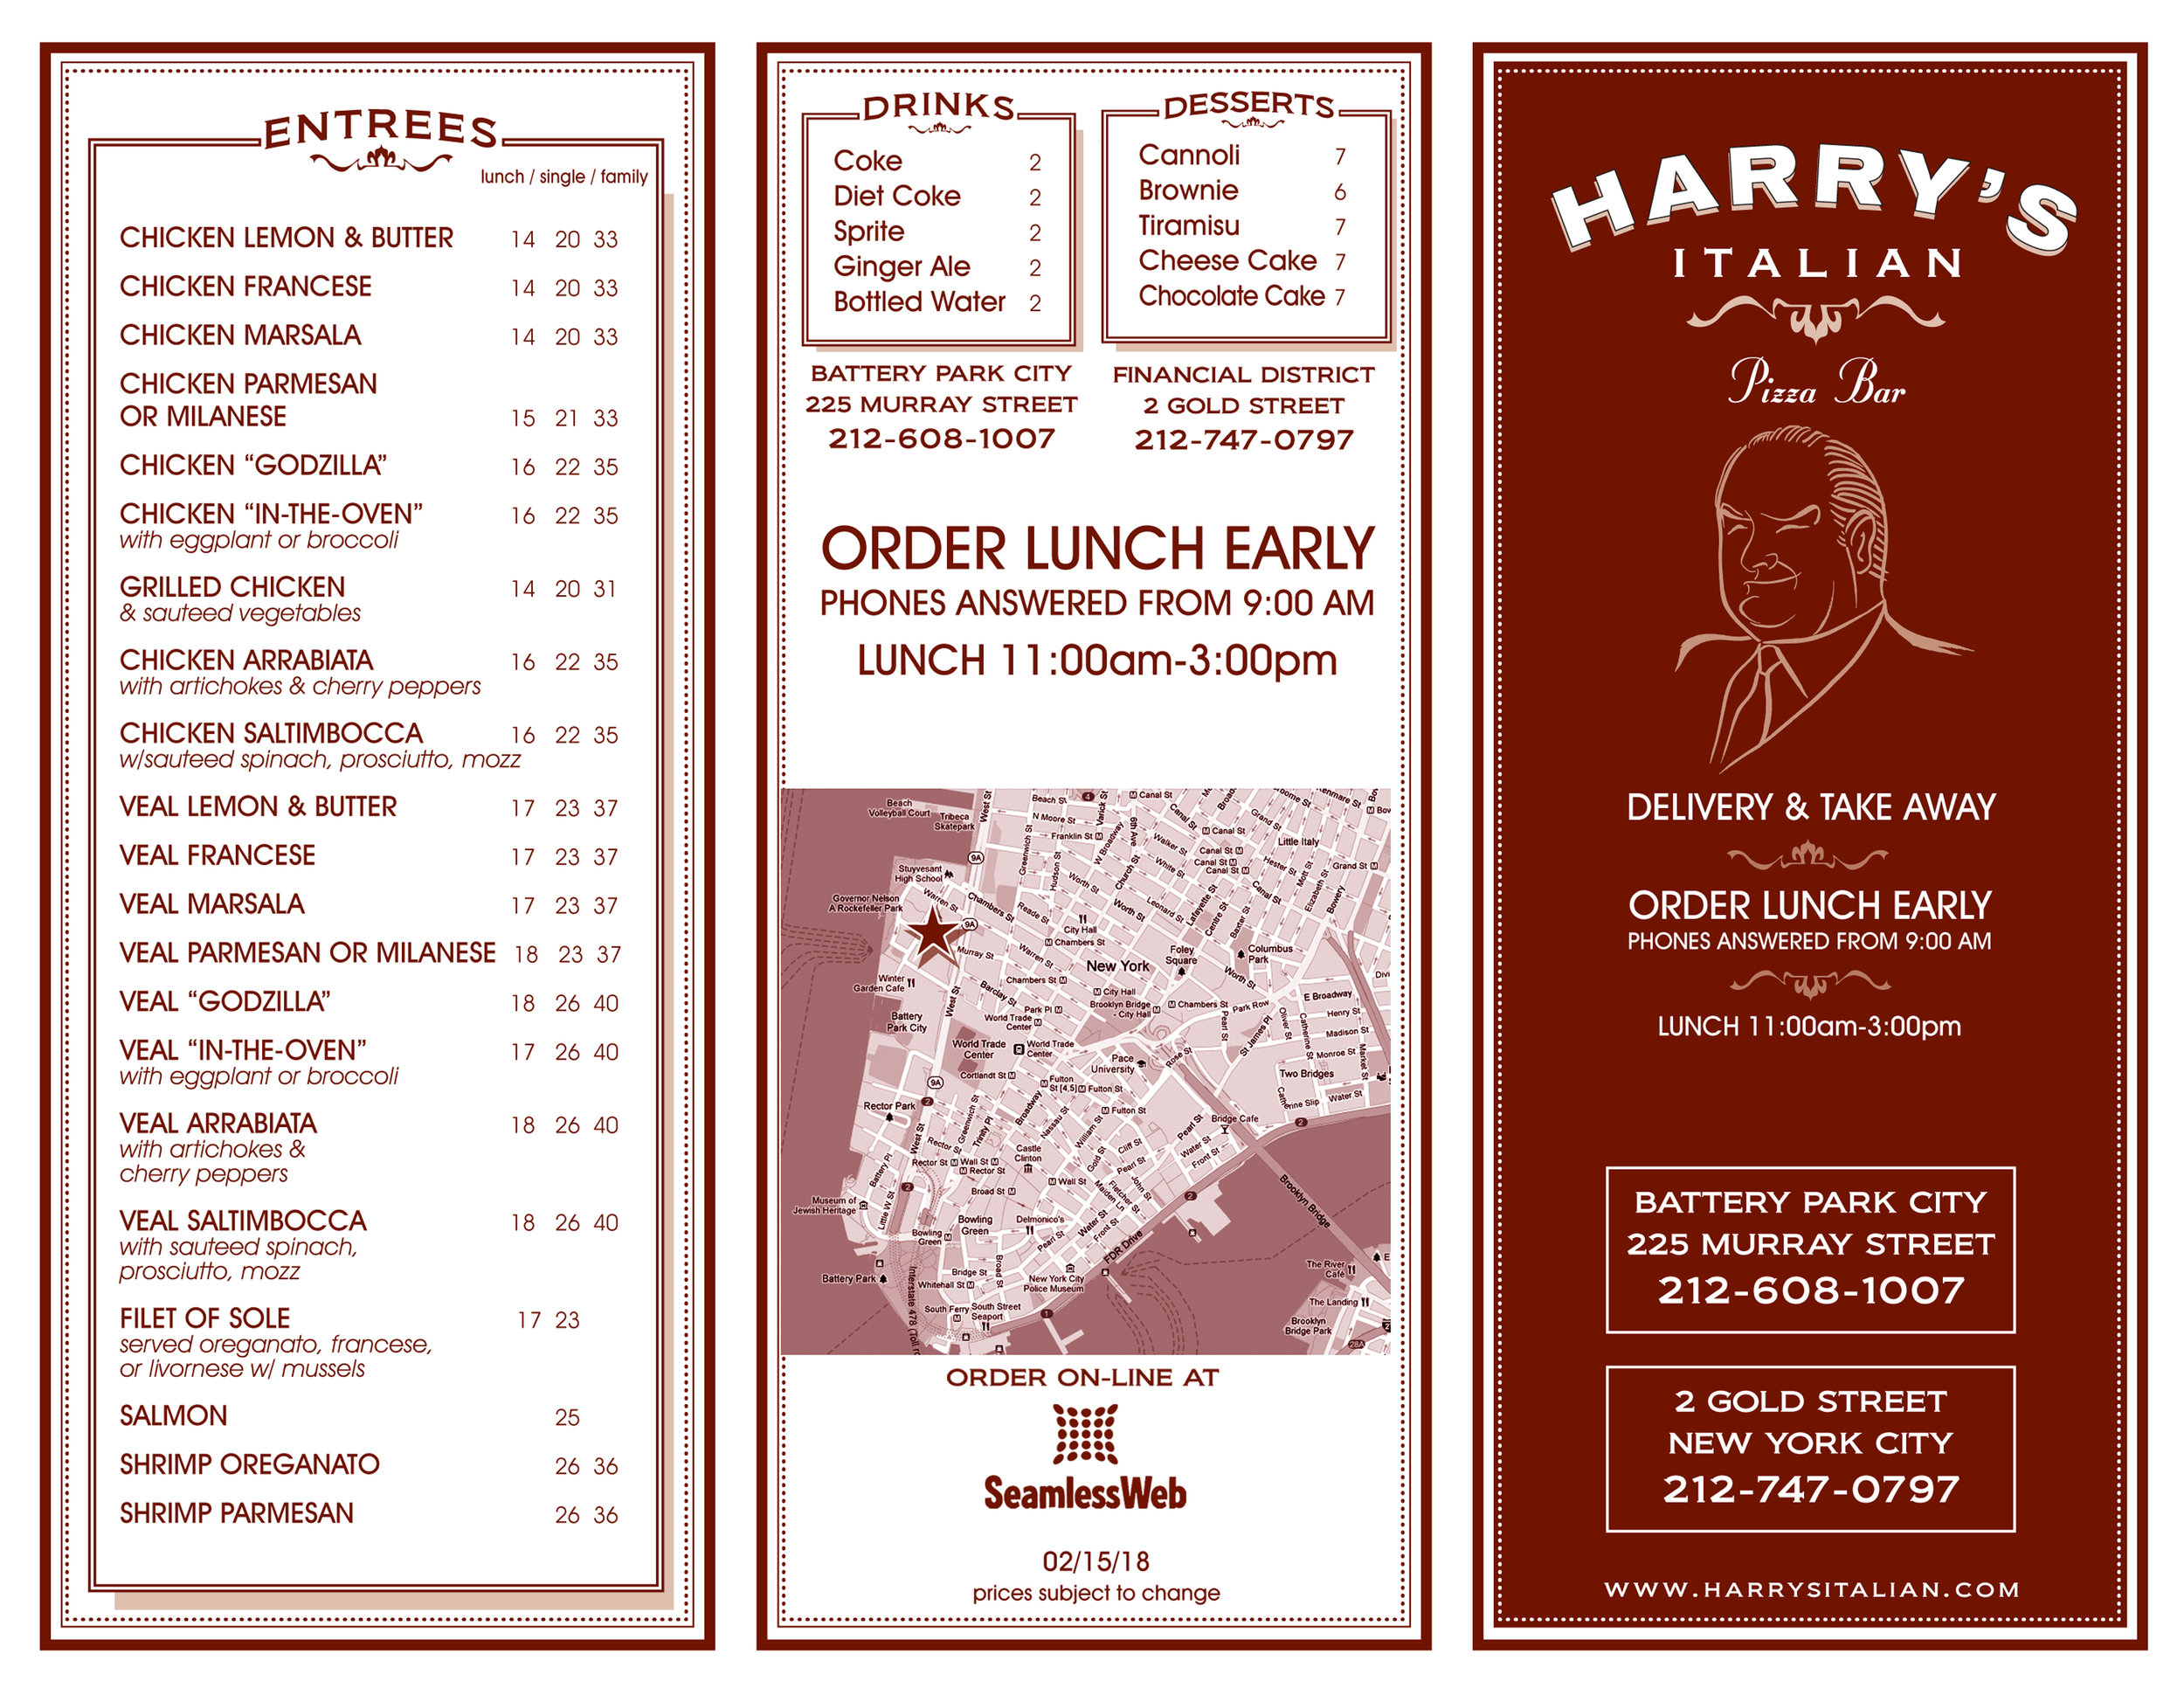 Harry's Italian - OFFICIAL WEBSITE, ORDER ONLINE DIRECT